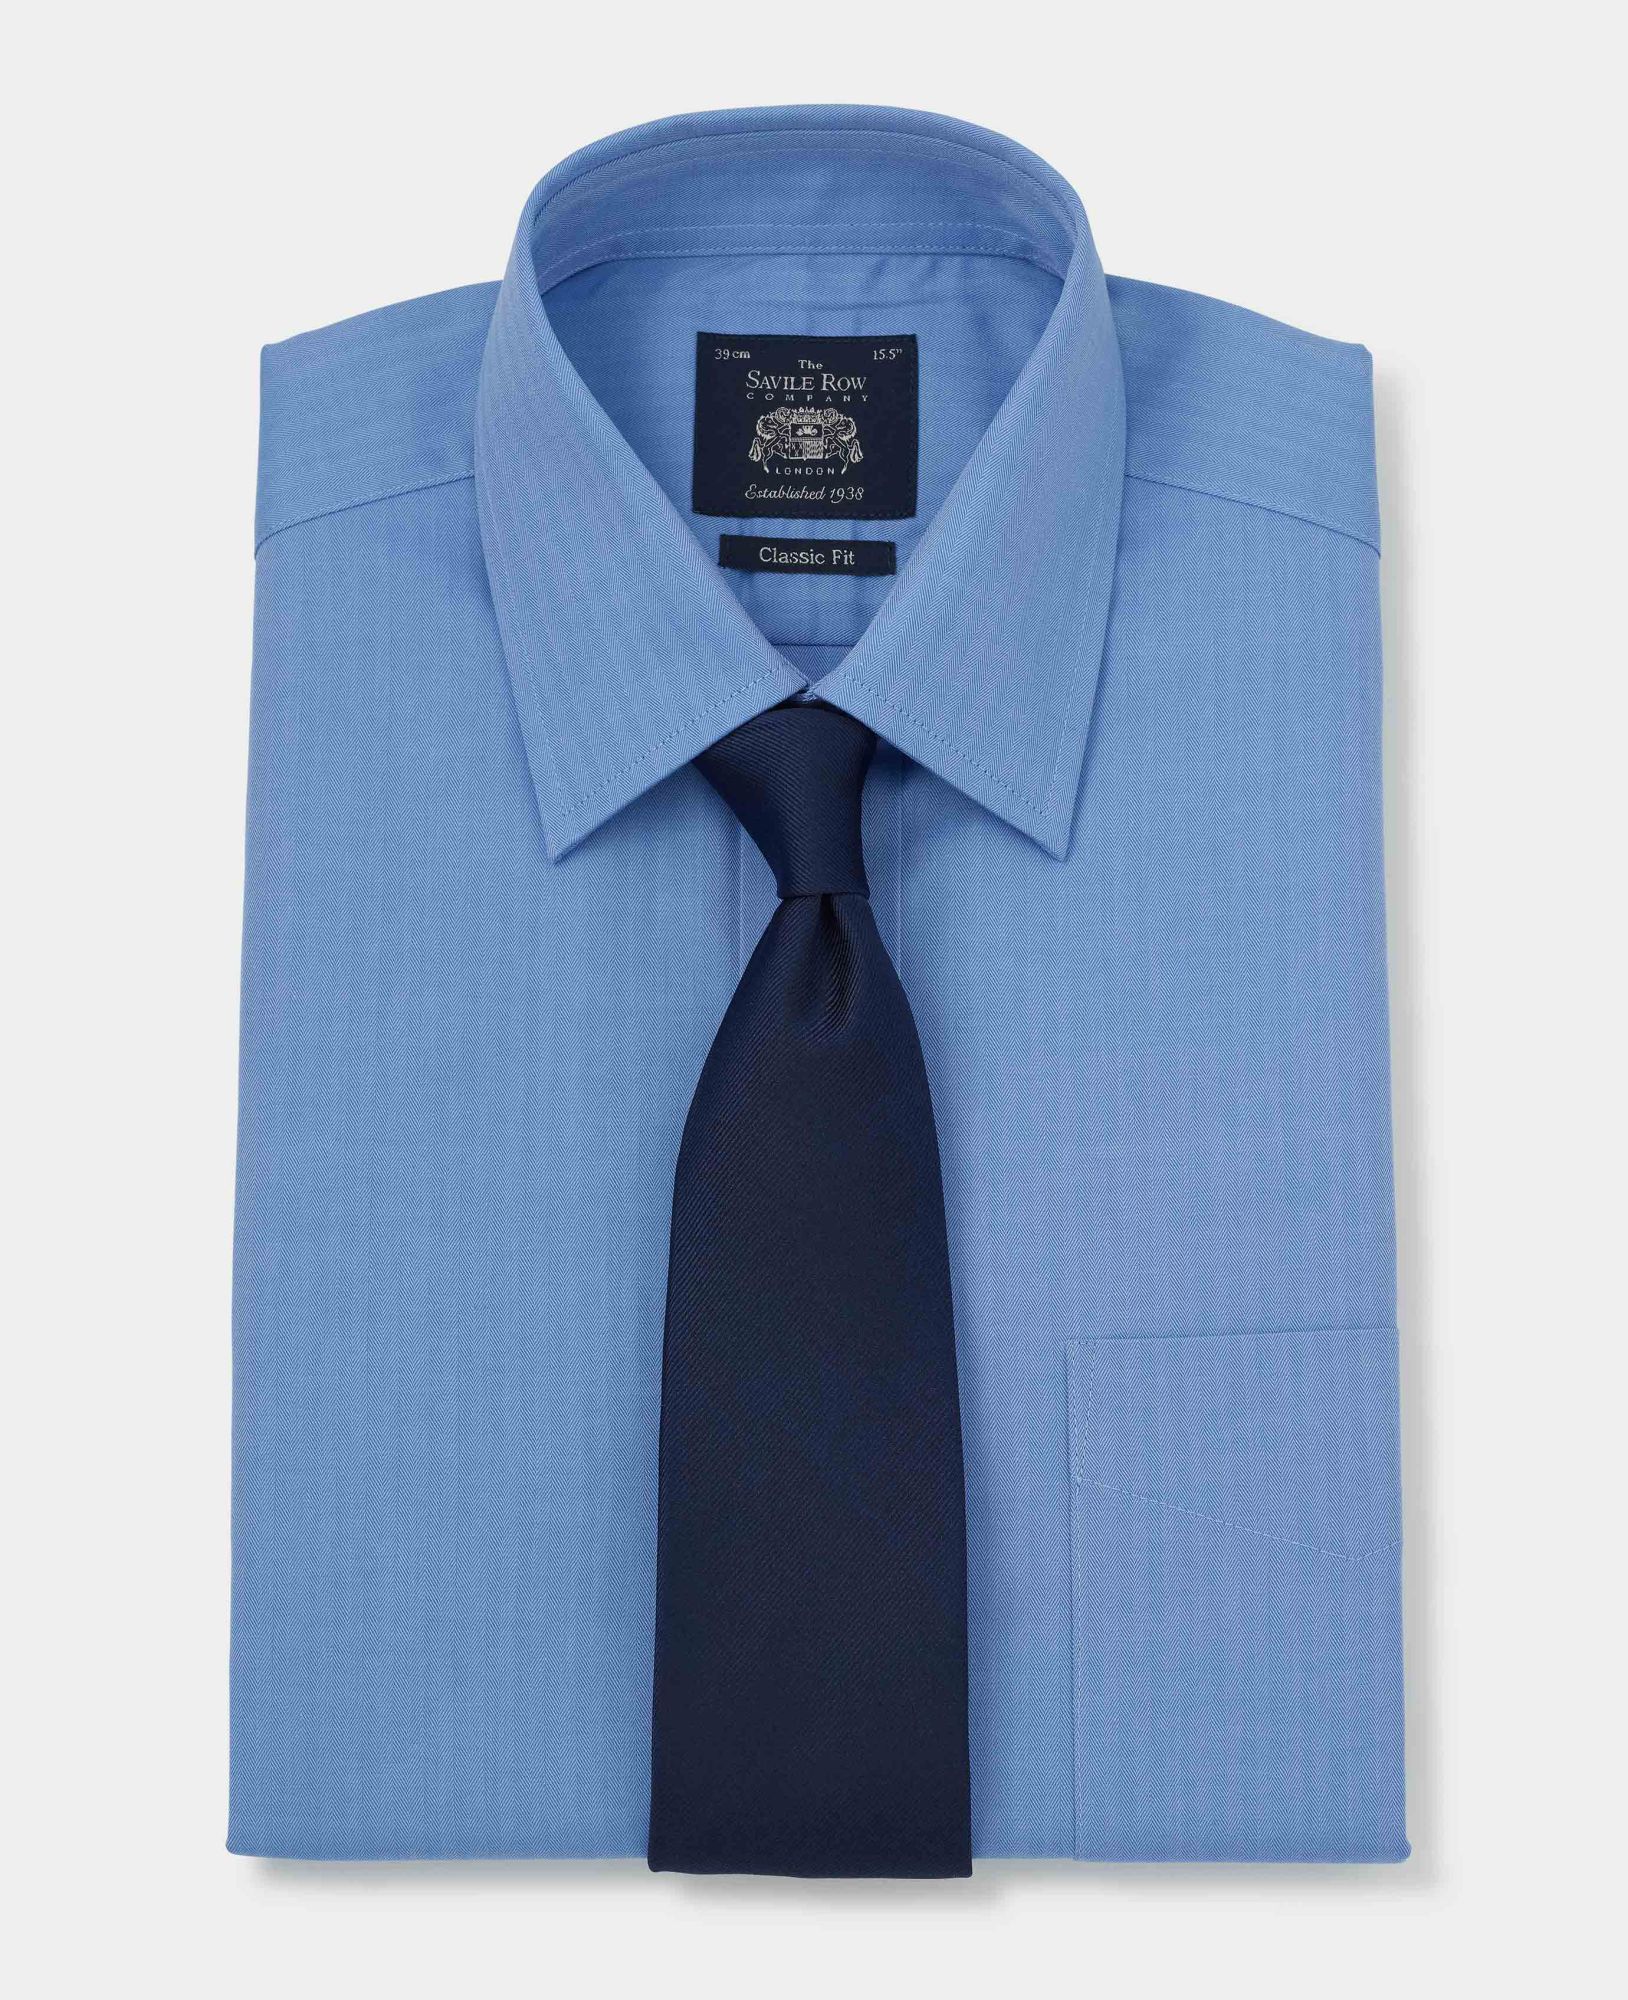 Mid Blue Herringbone Classic Fit Shirt - Double Cuff 19 1/2